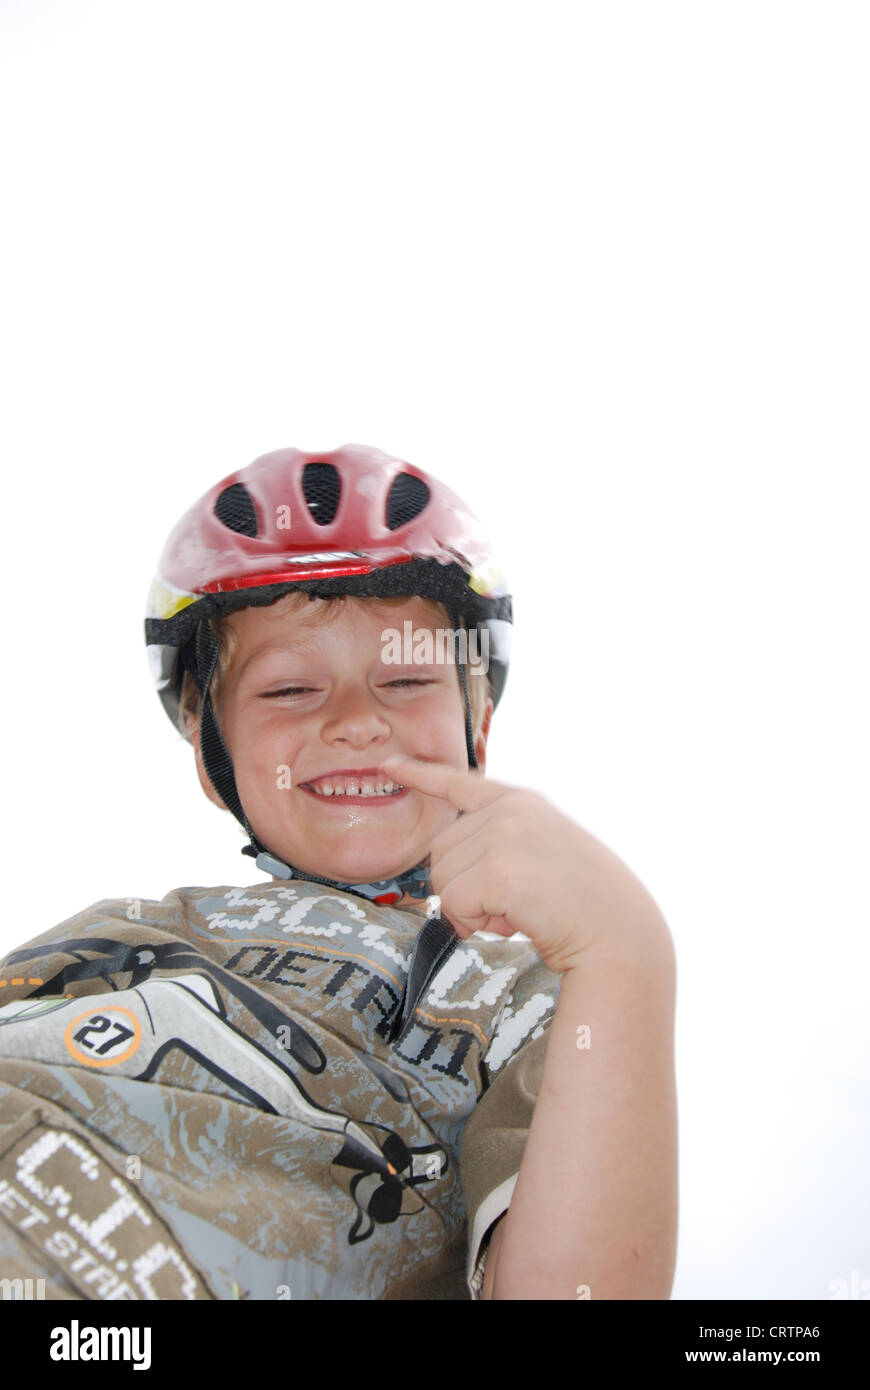 Cheerful gesticulating child / helmet boy Stock Photo